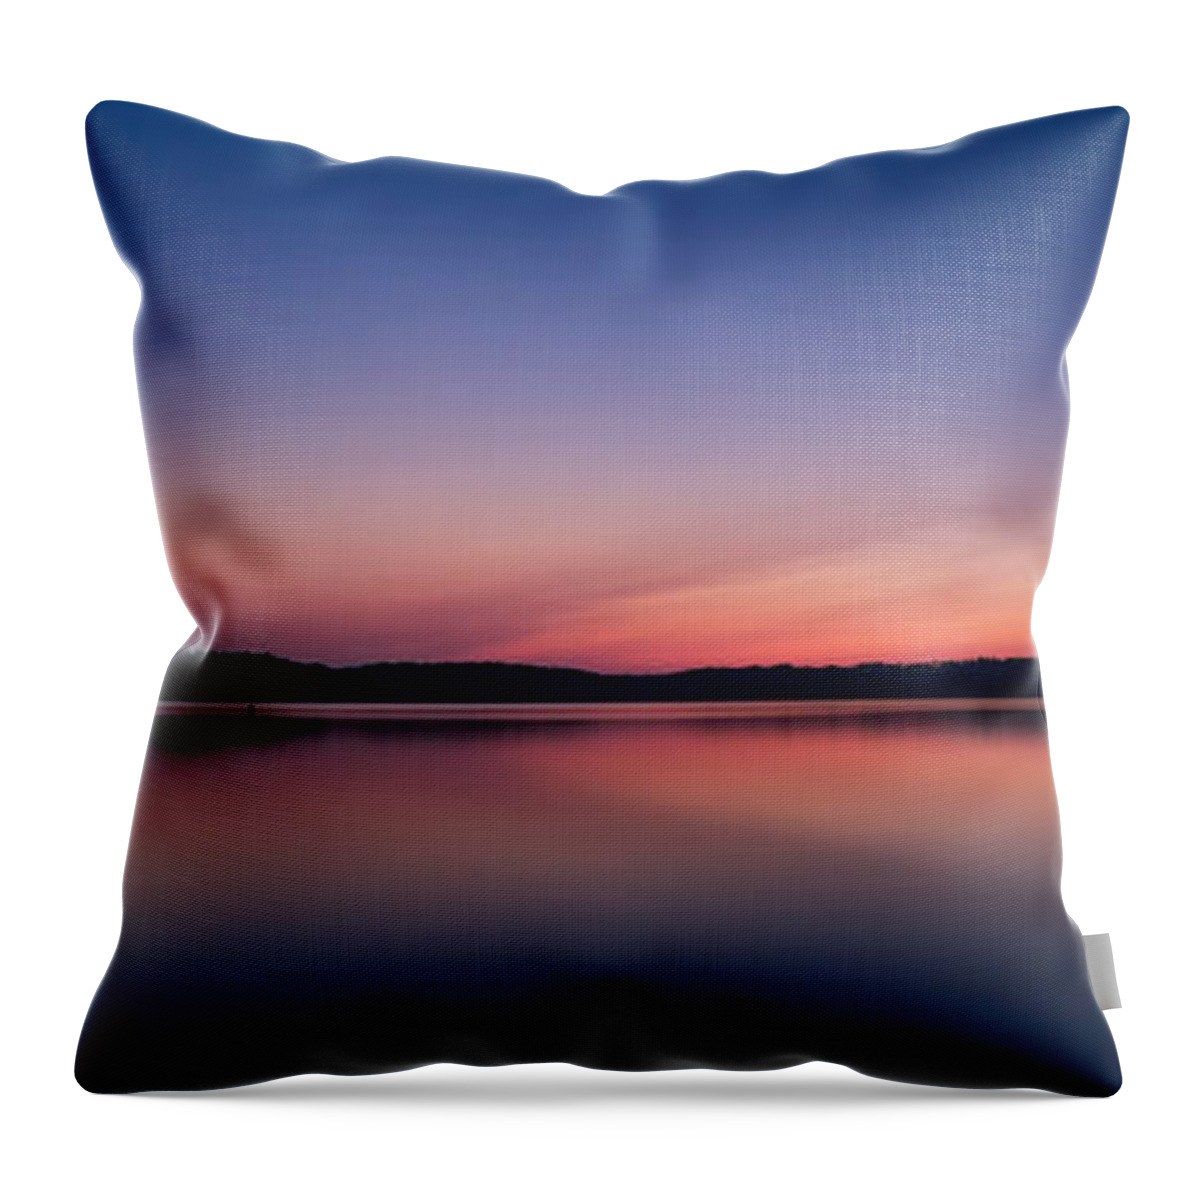 Lake-lanier Throw Pillow featuring the photograph Lake Lanier after Sunset by Bernd Laeschke